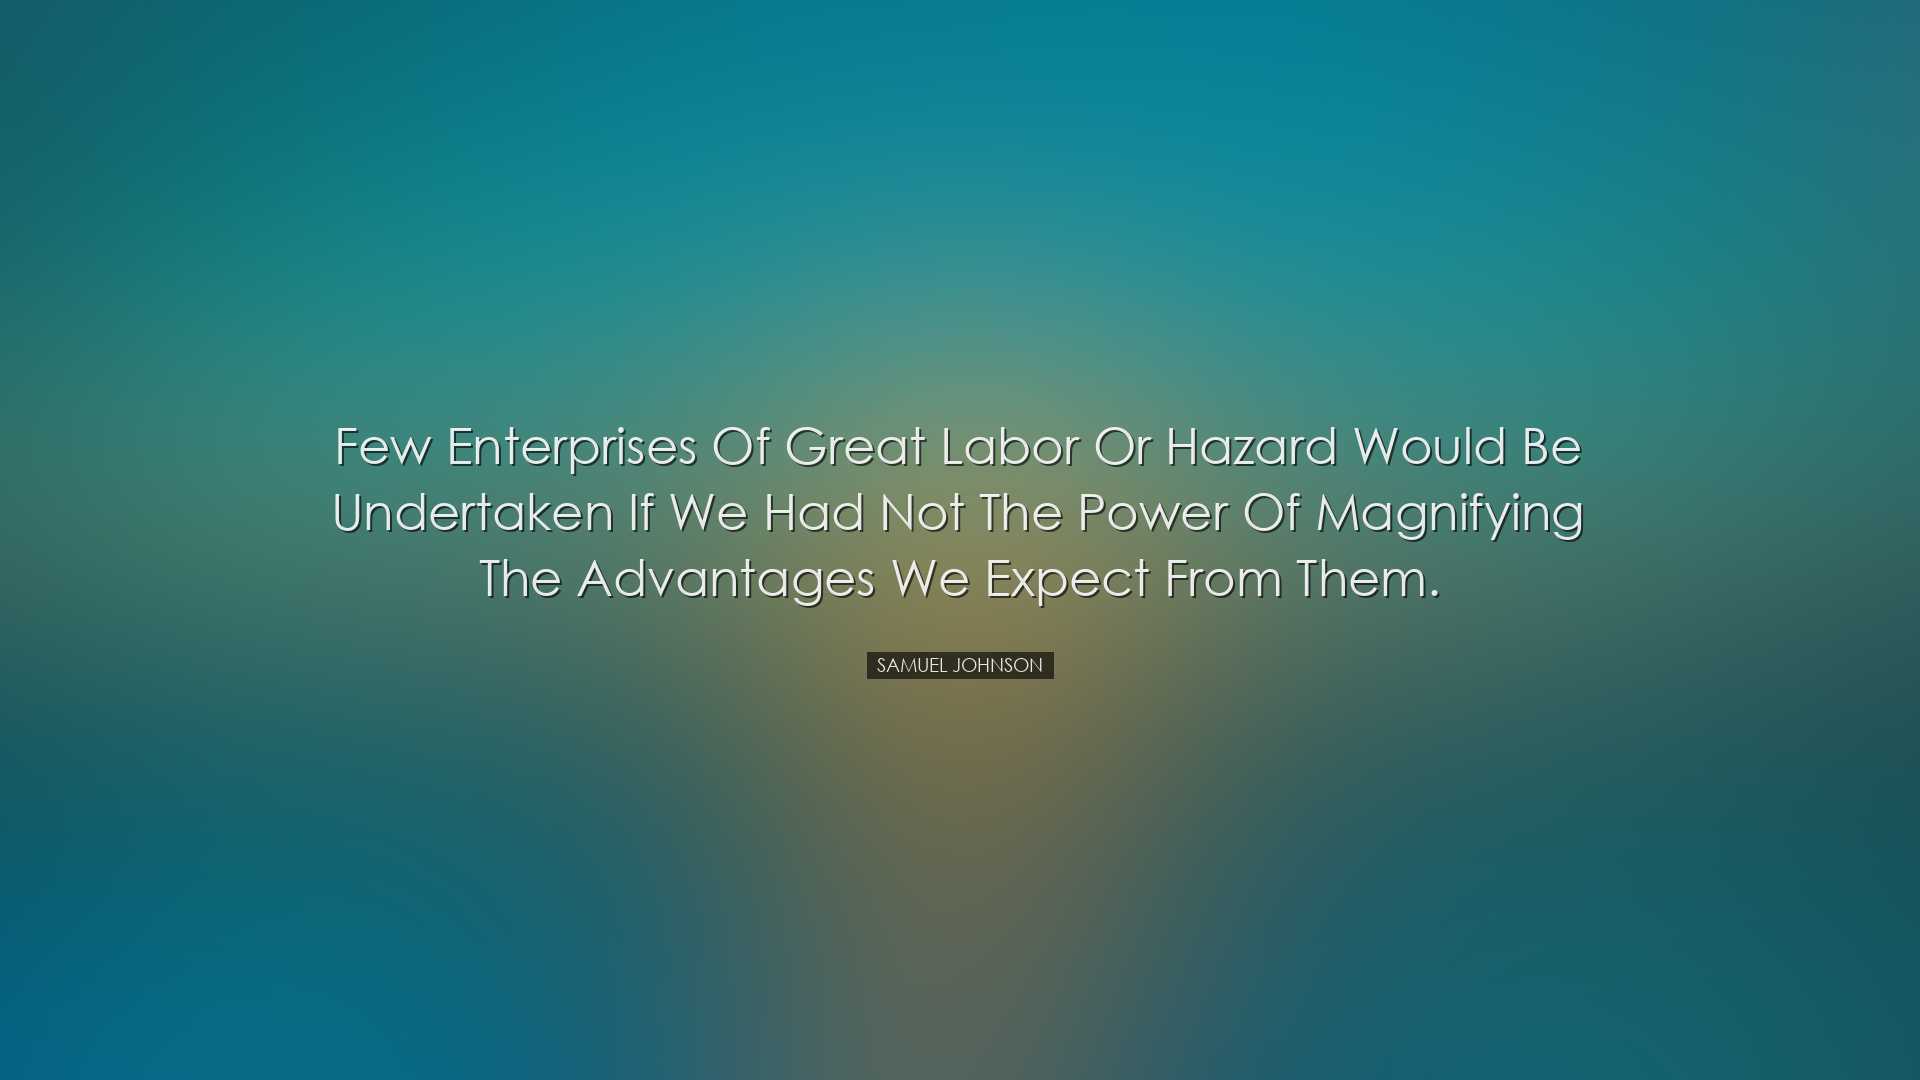 Few enterprises of great labor or hazard would be undertaken if we